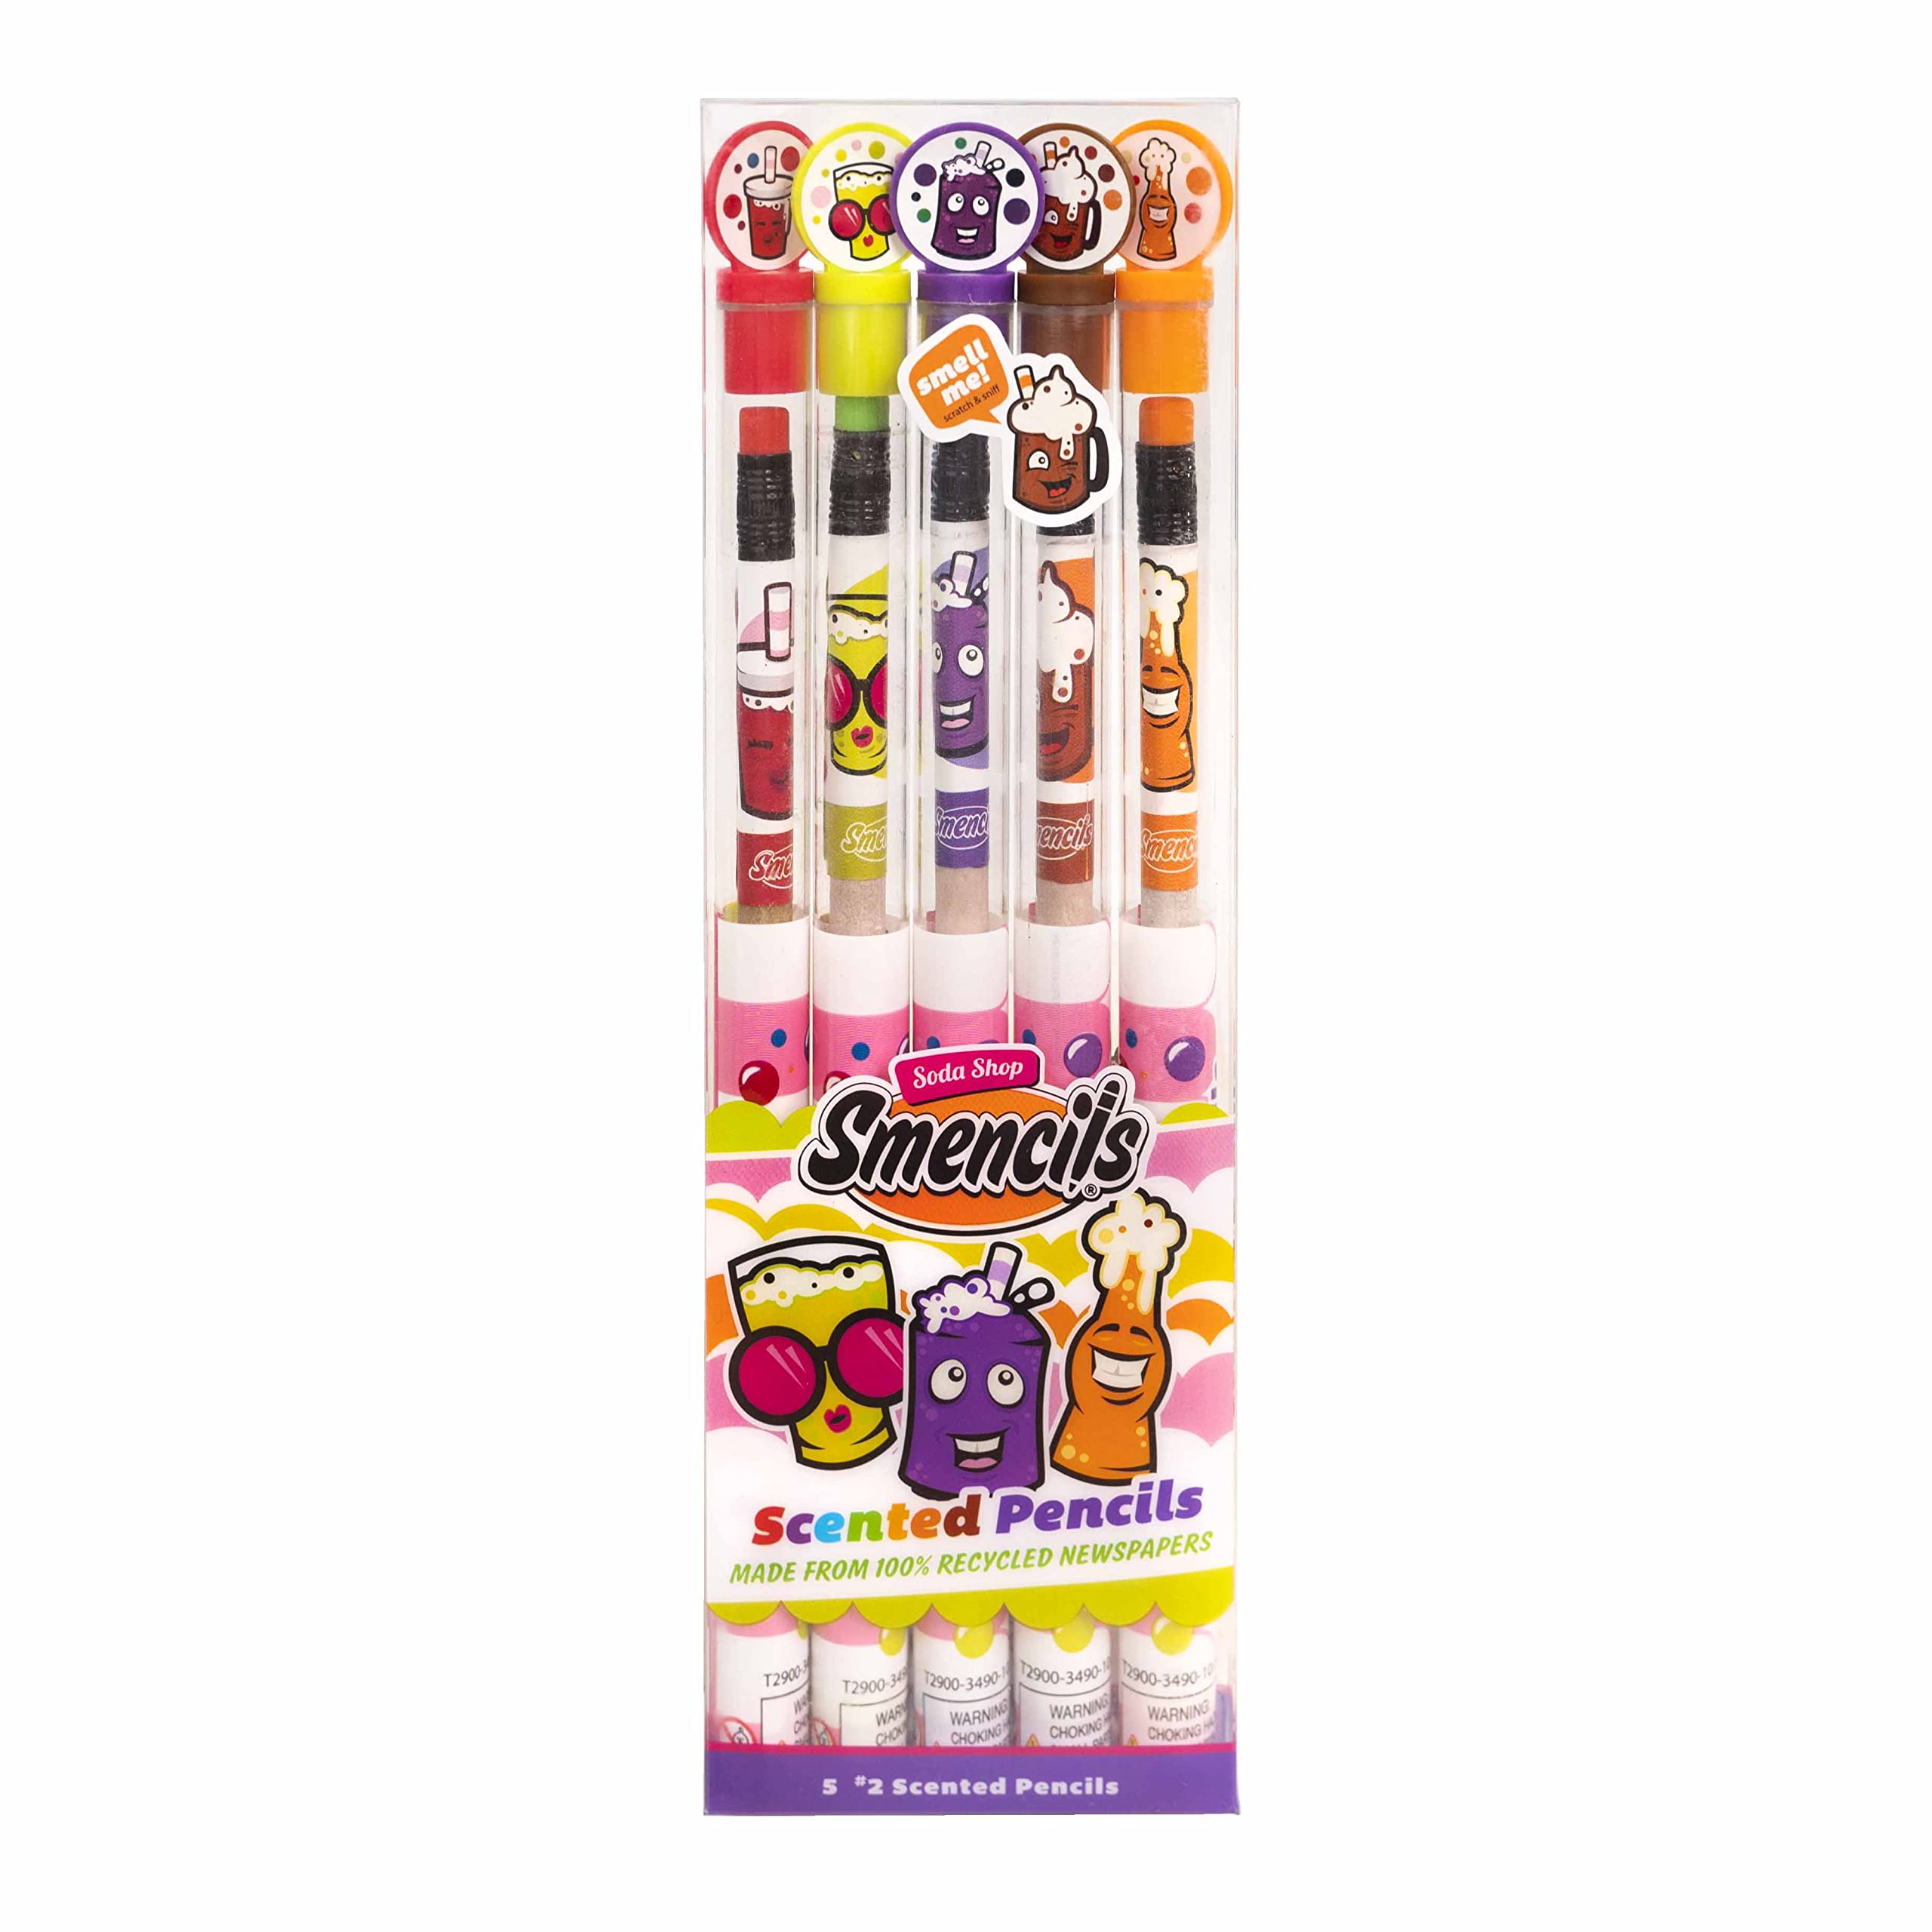 Scentco Soda Shop Smencils - Scented Pencils, 5 Count, Gifts For Kids, School Supplies, Classroom Rewards, Party Favors